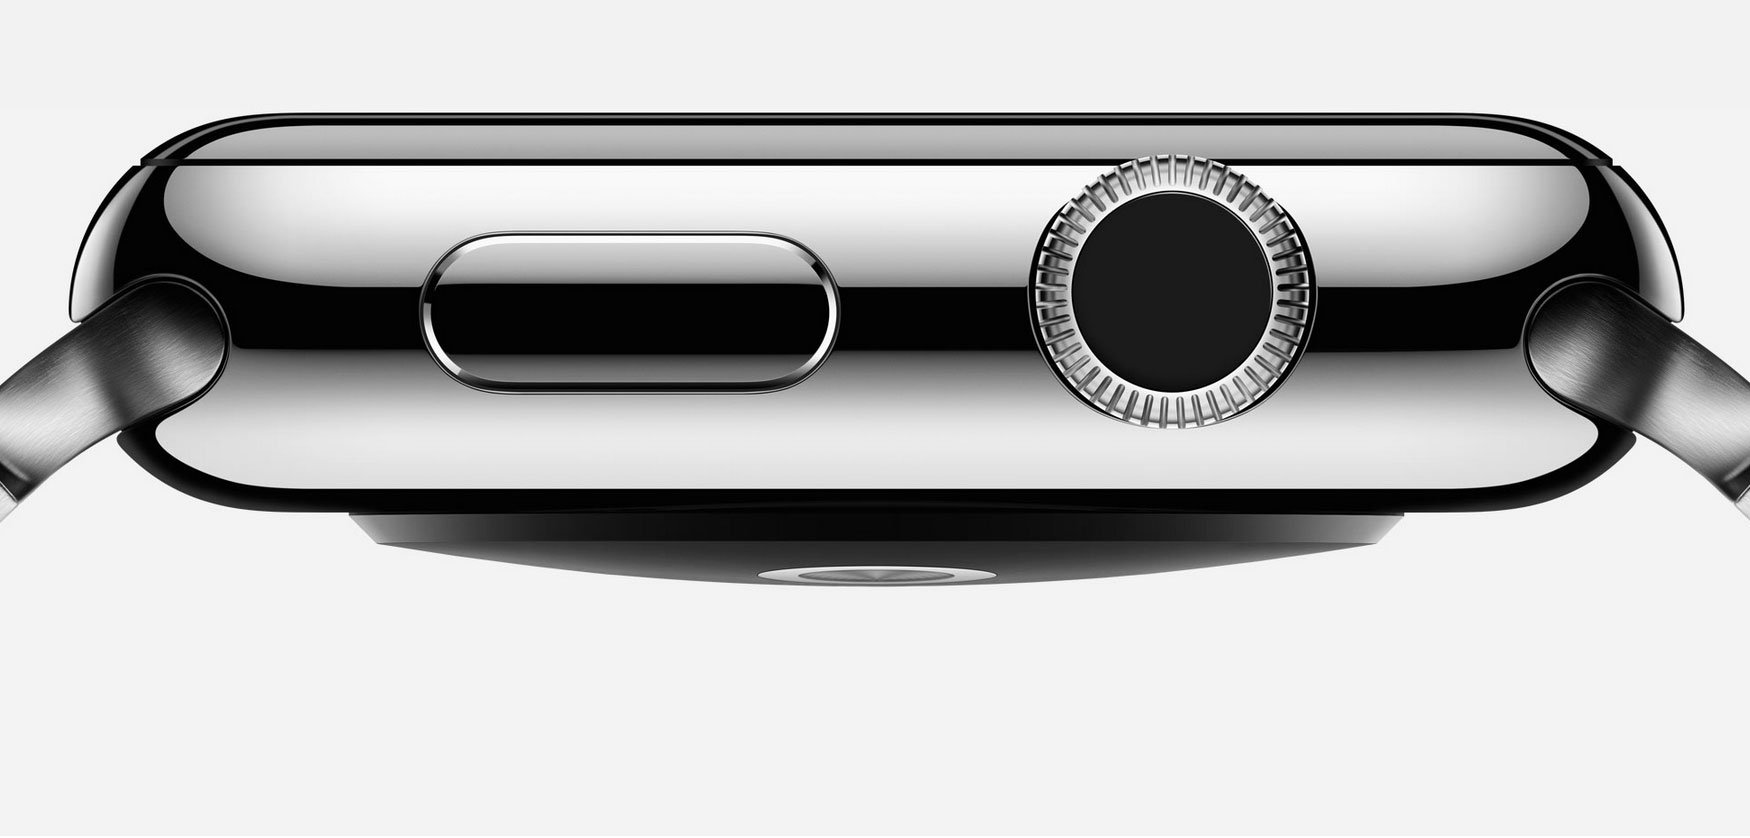 Wann kommt die Apple Watch: Apple Uhr Release im Frühling 2015! 1